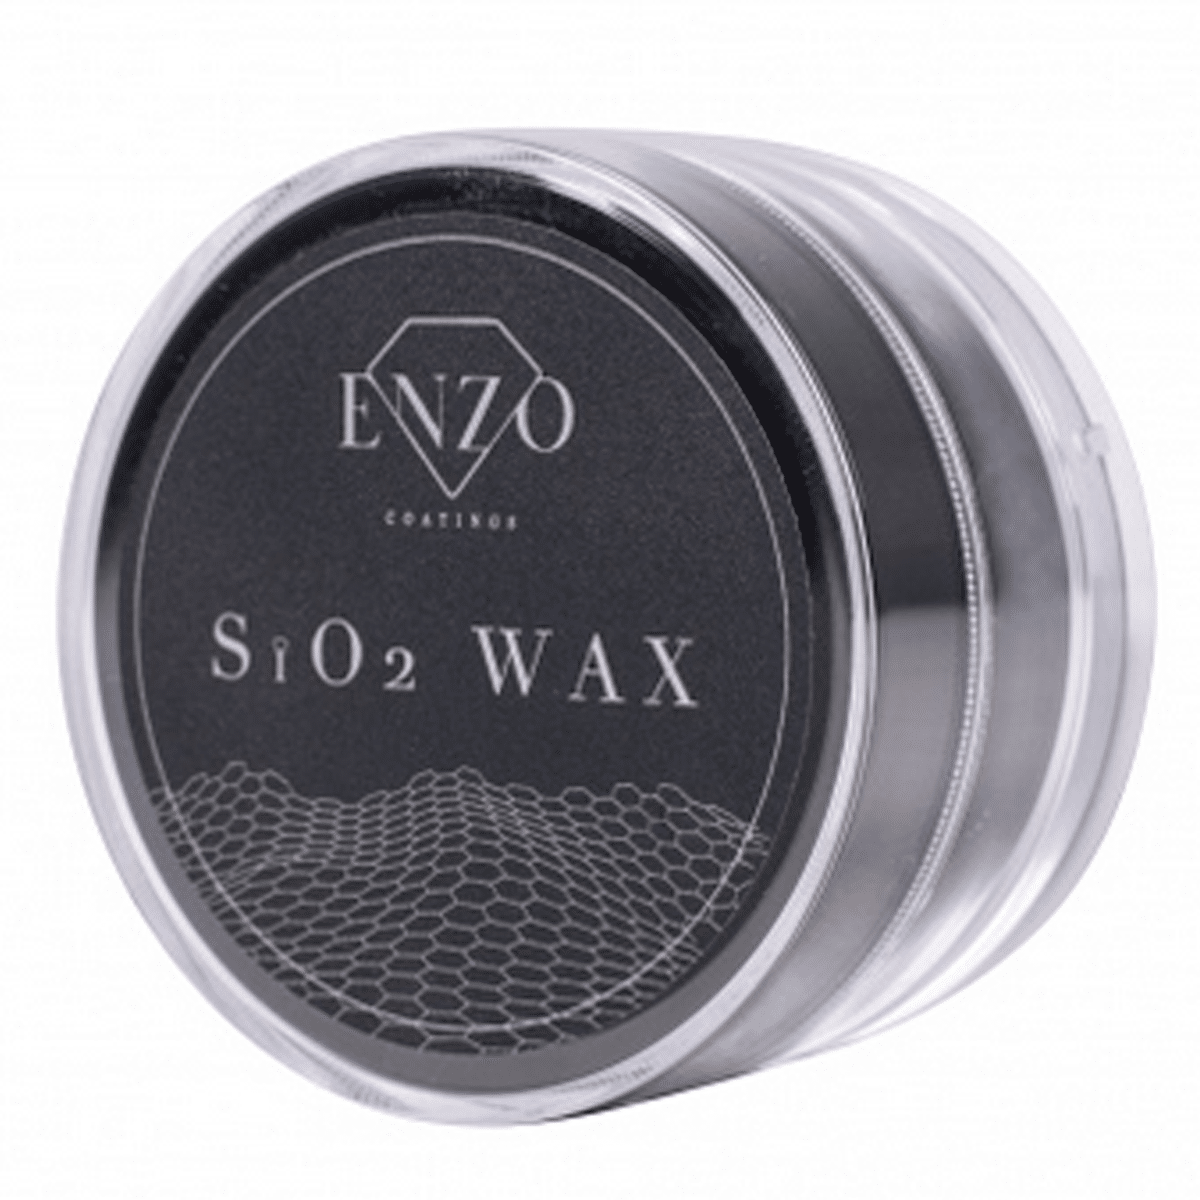 ENZO Coatings SiO2 Wax 40g